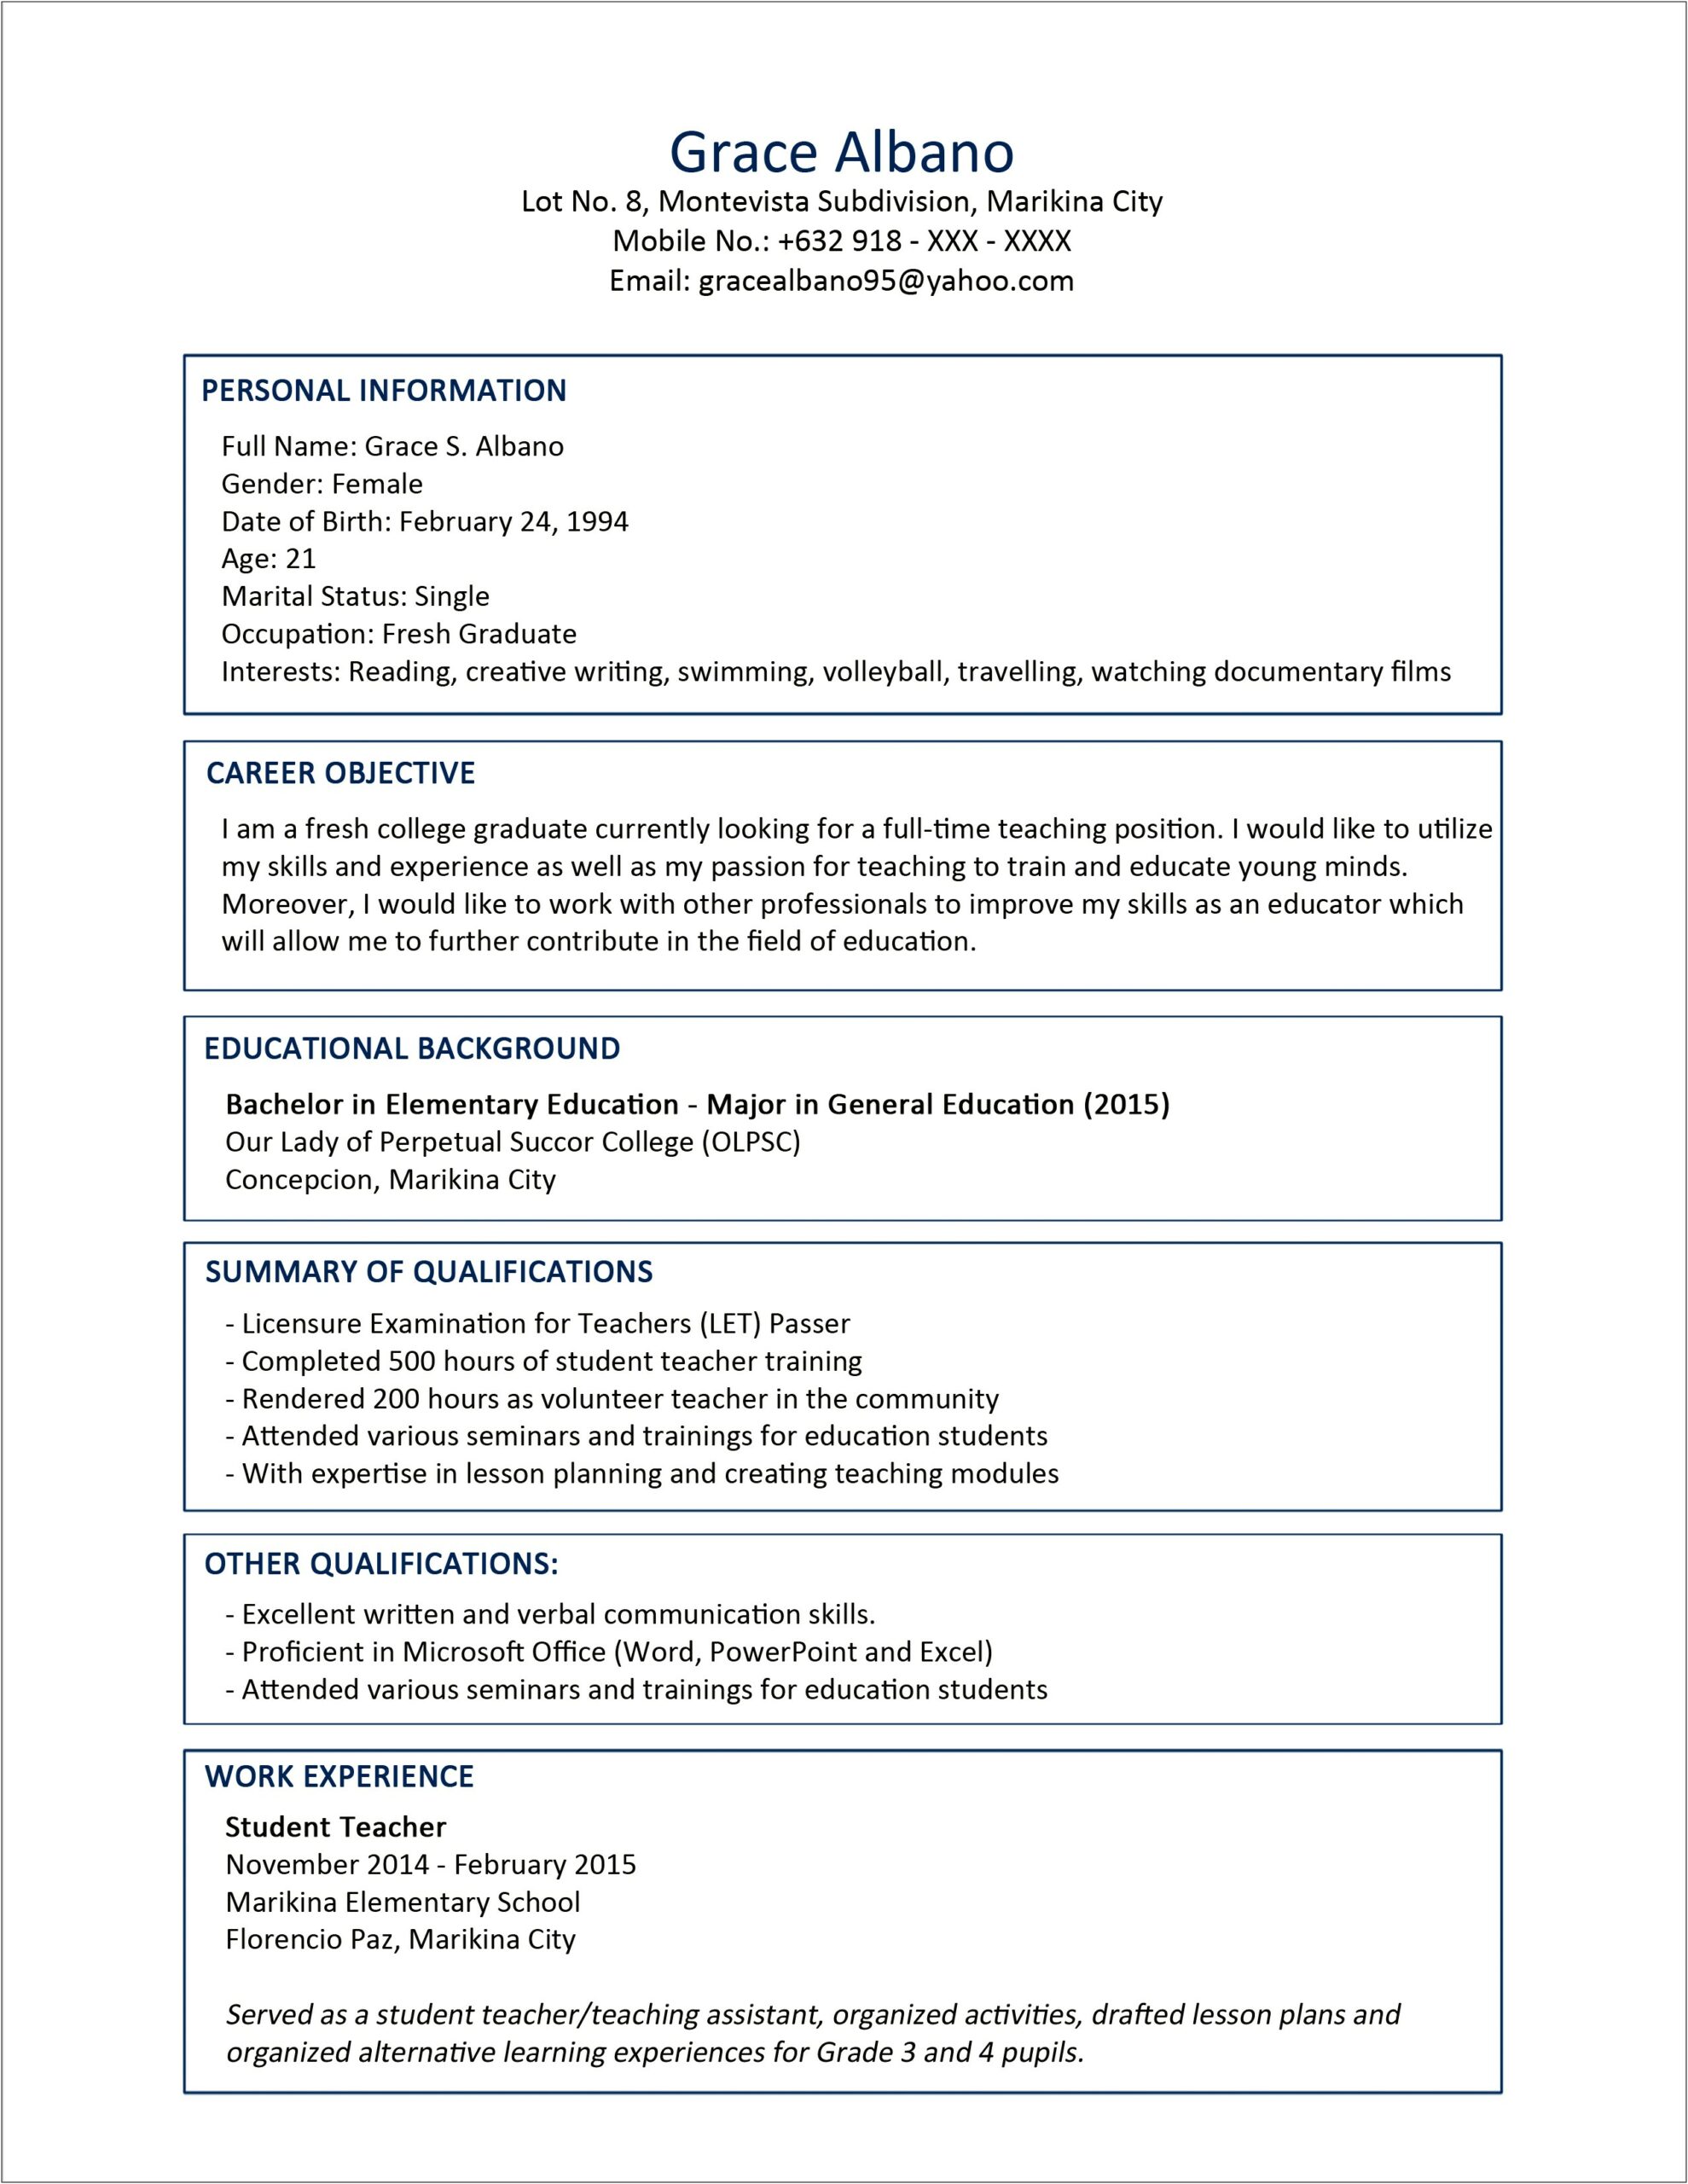 Recent Business Management Graduate Resume Example